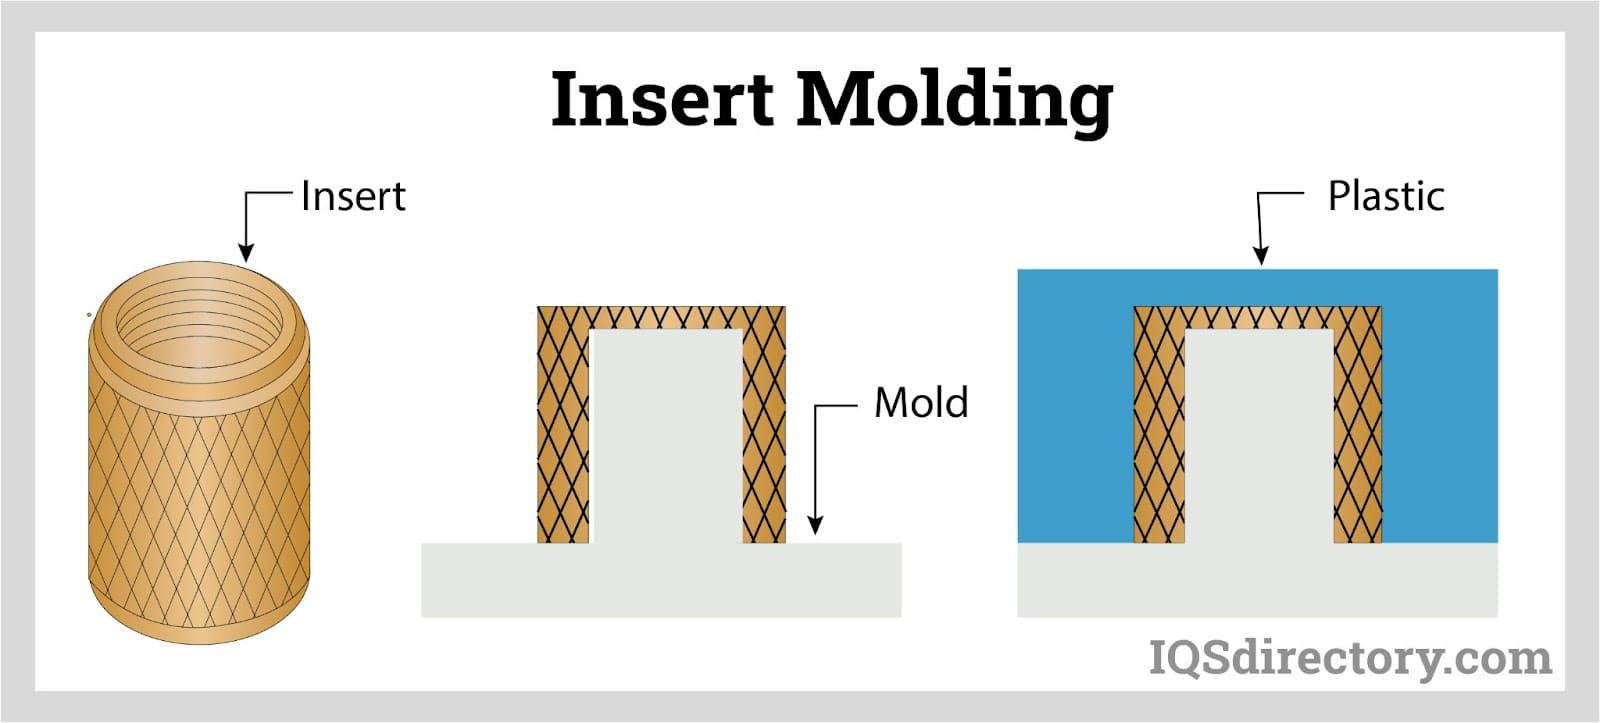 Insert Molding